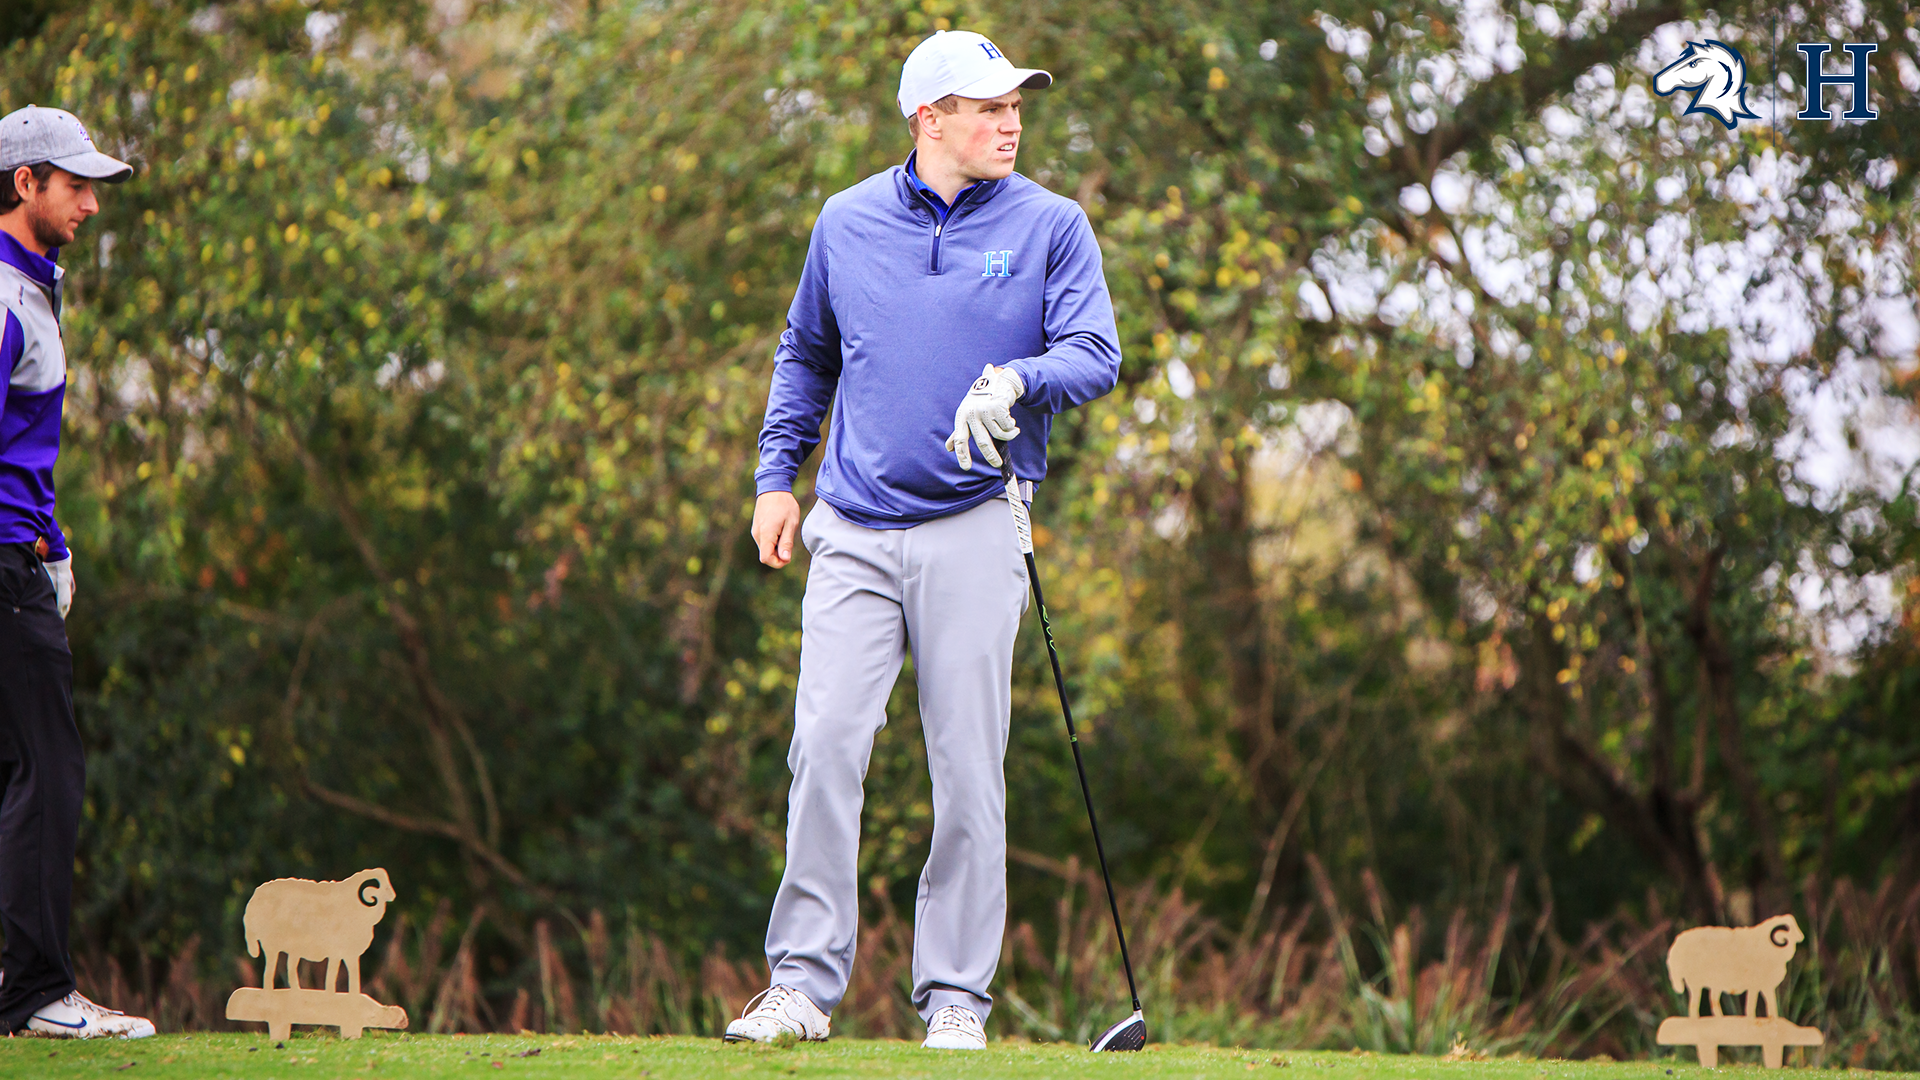 George Roberts named G-MAC Men's Golfer of the Week (March 3-10)